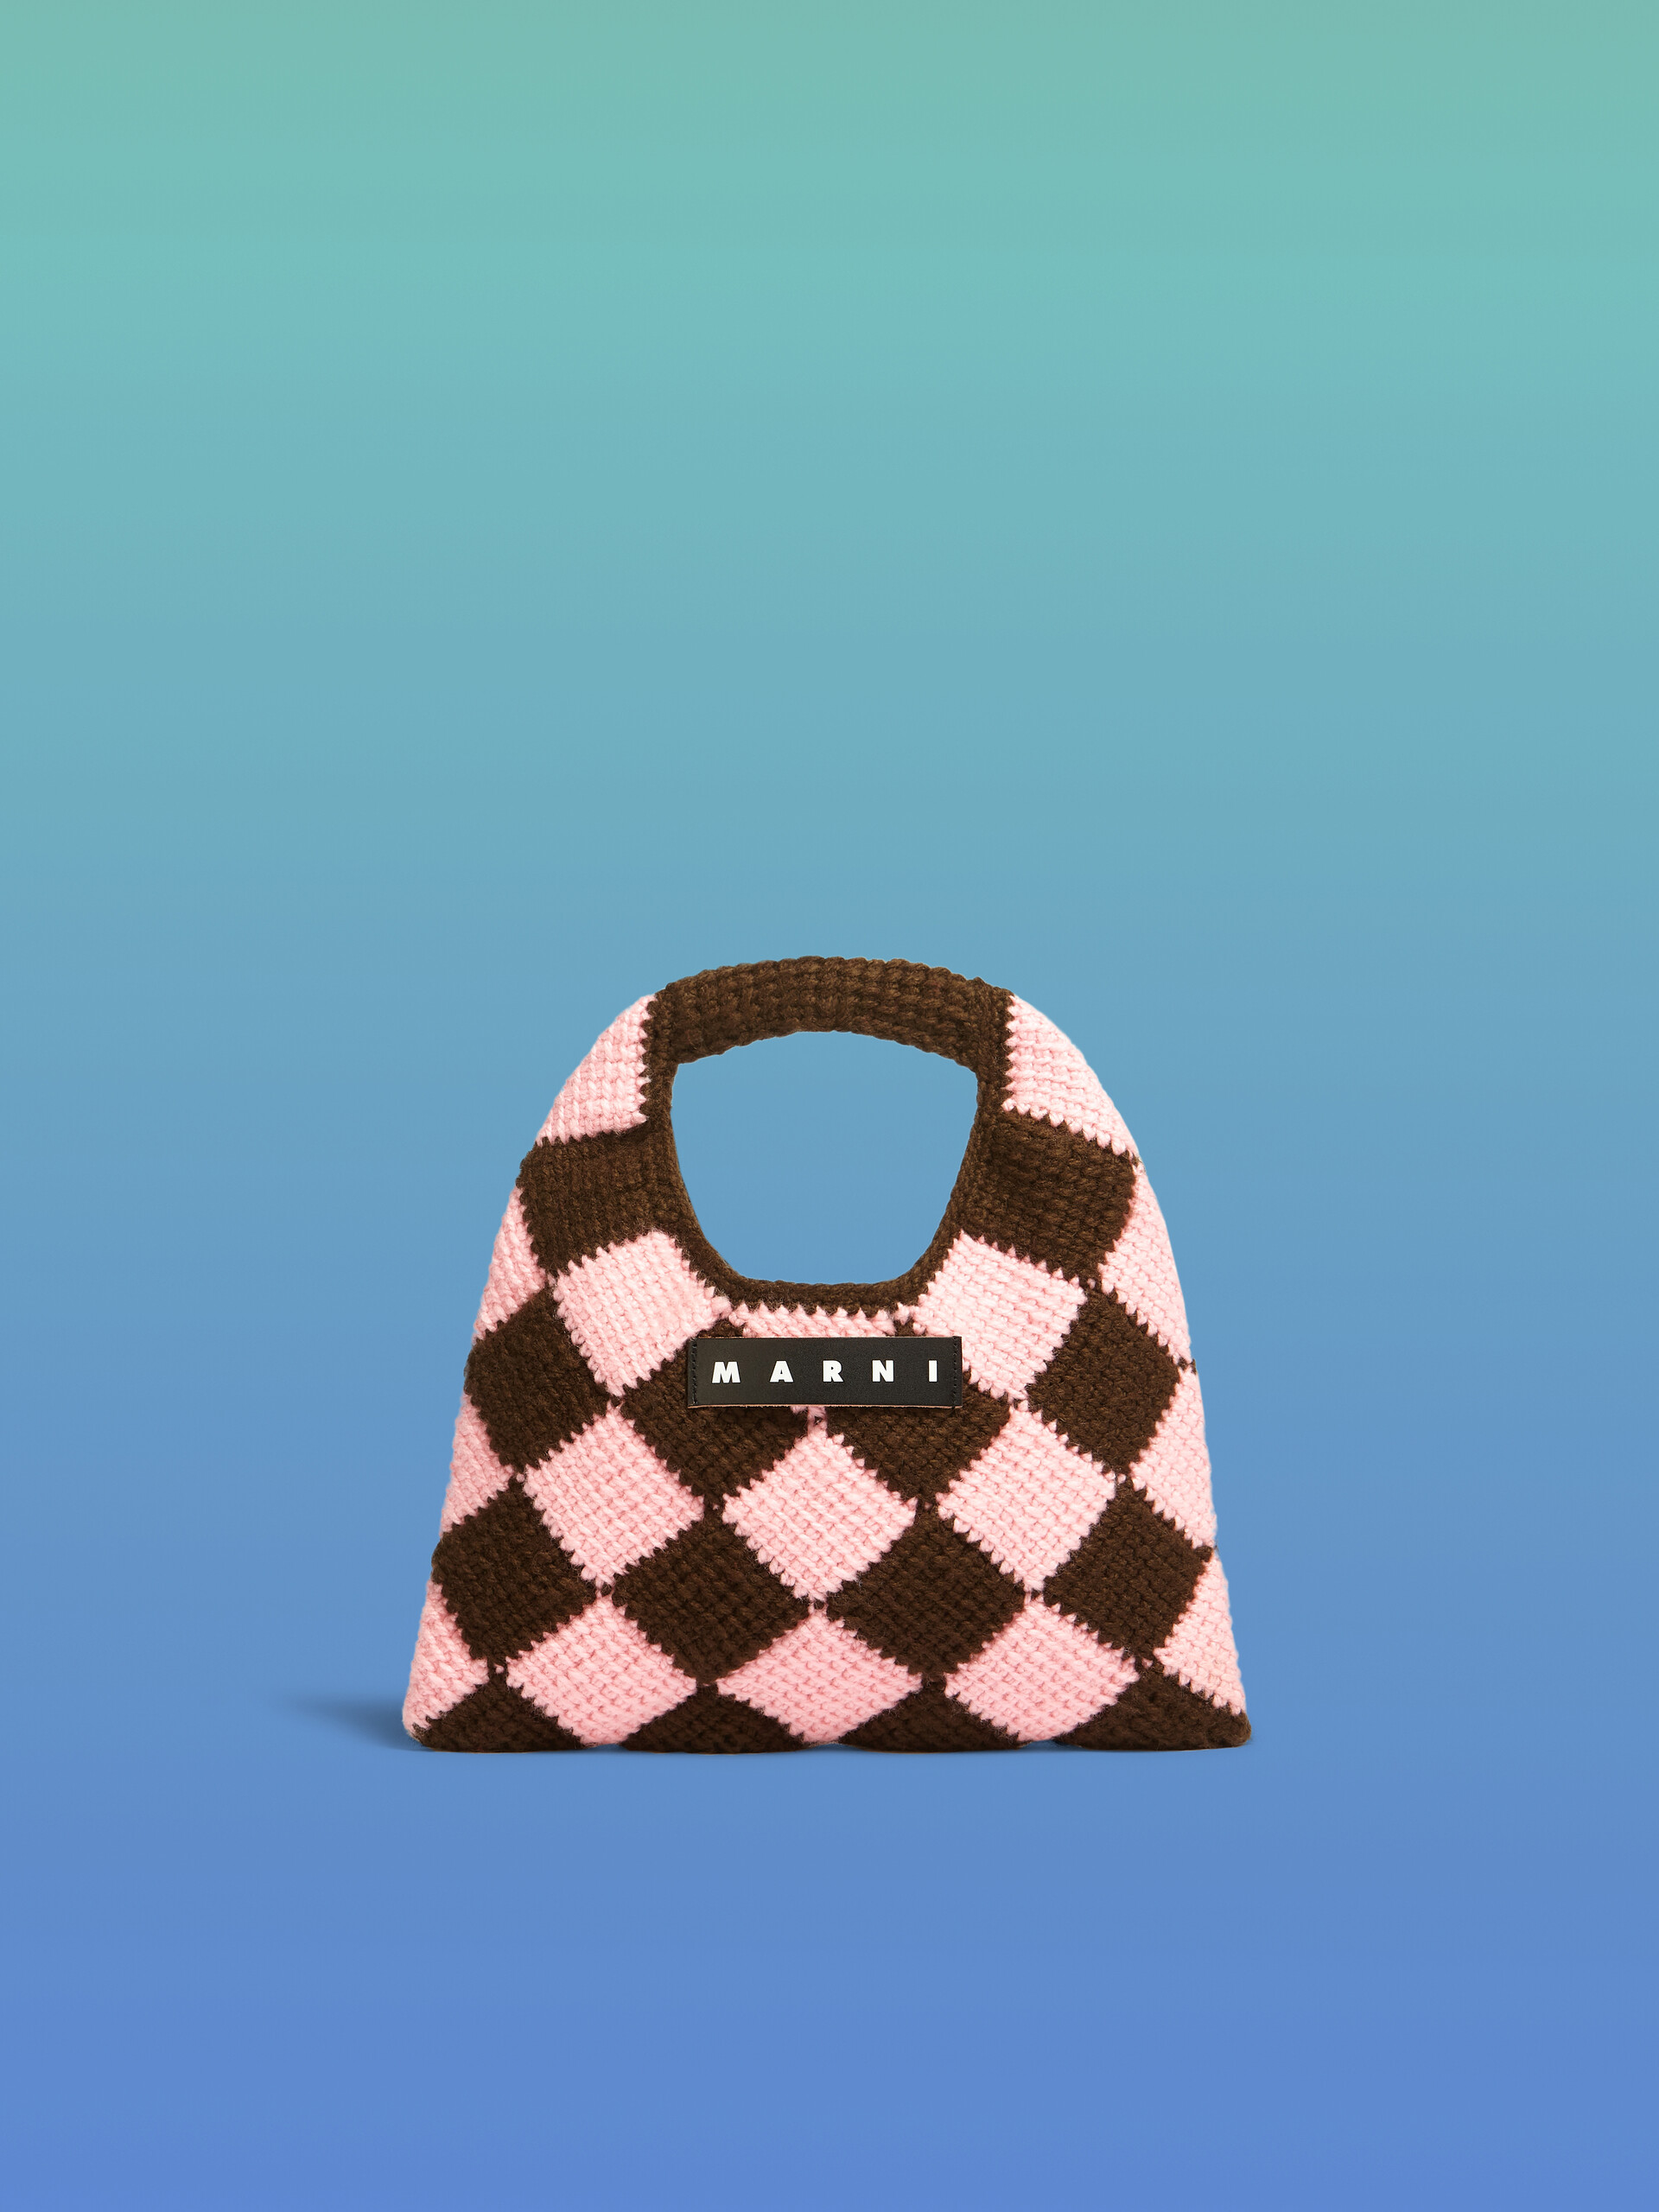 MARNI MARKET DIAMOND mini bag in blue and brown tech wool - Shopping Bags - Image 1